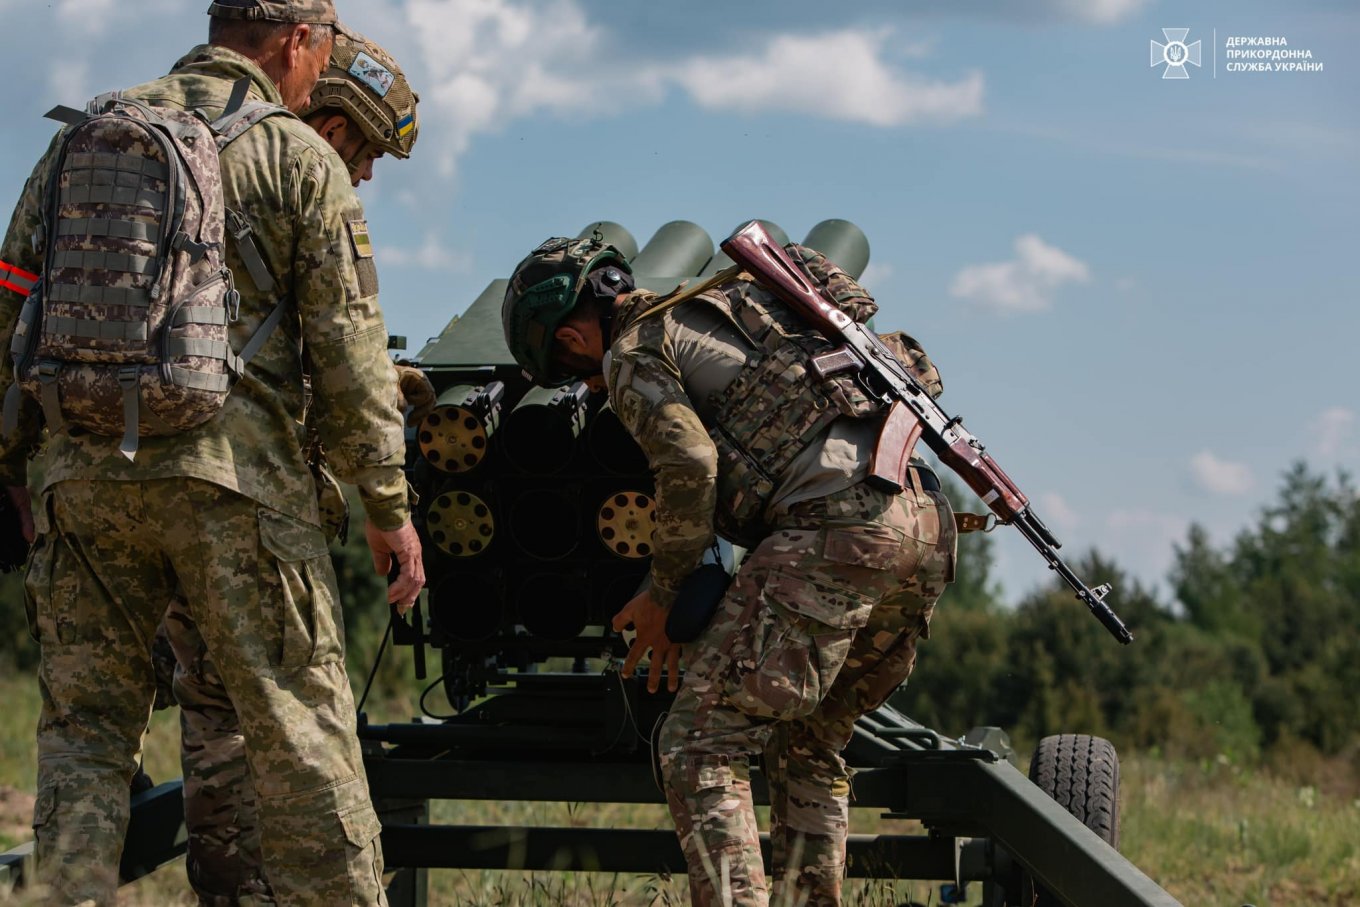 RAK-SA-12 MLRS are being prepared for firing, Ukrainian Border Guards Showed How Their Mini-MLRSs Will Eliminate russian Infantry, Defense Express